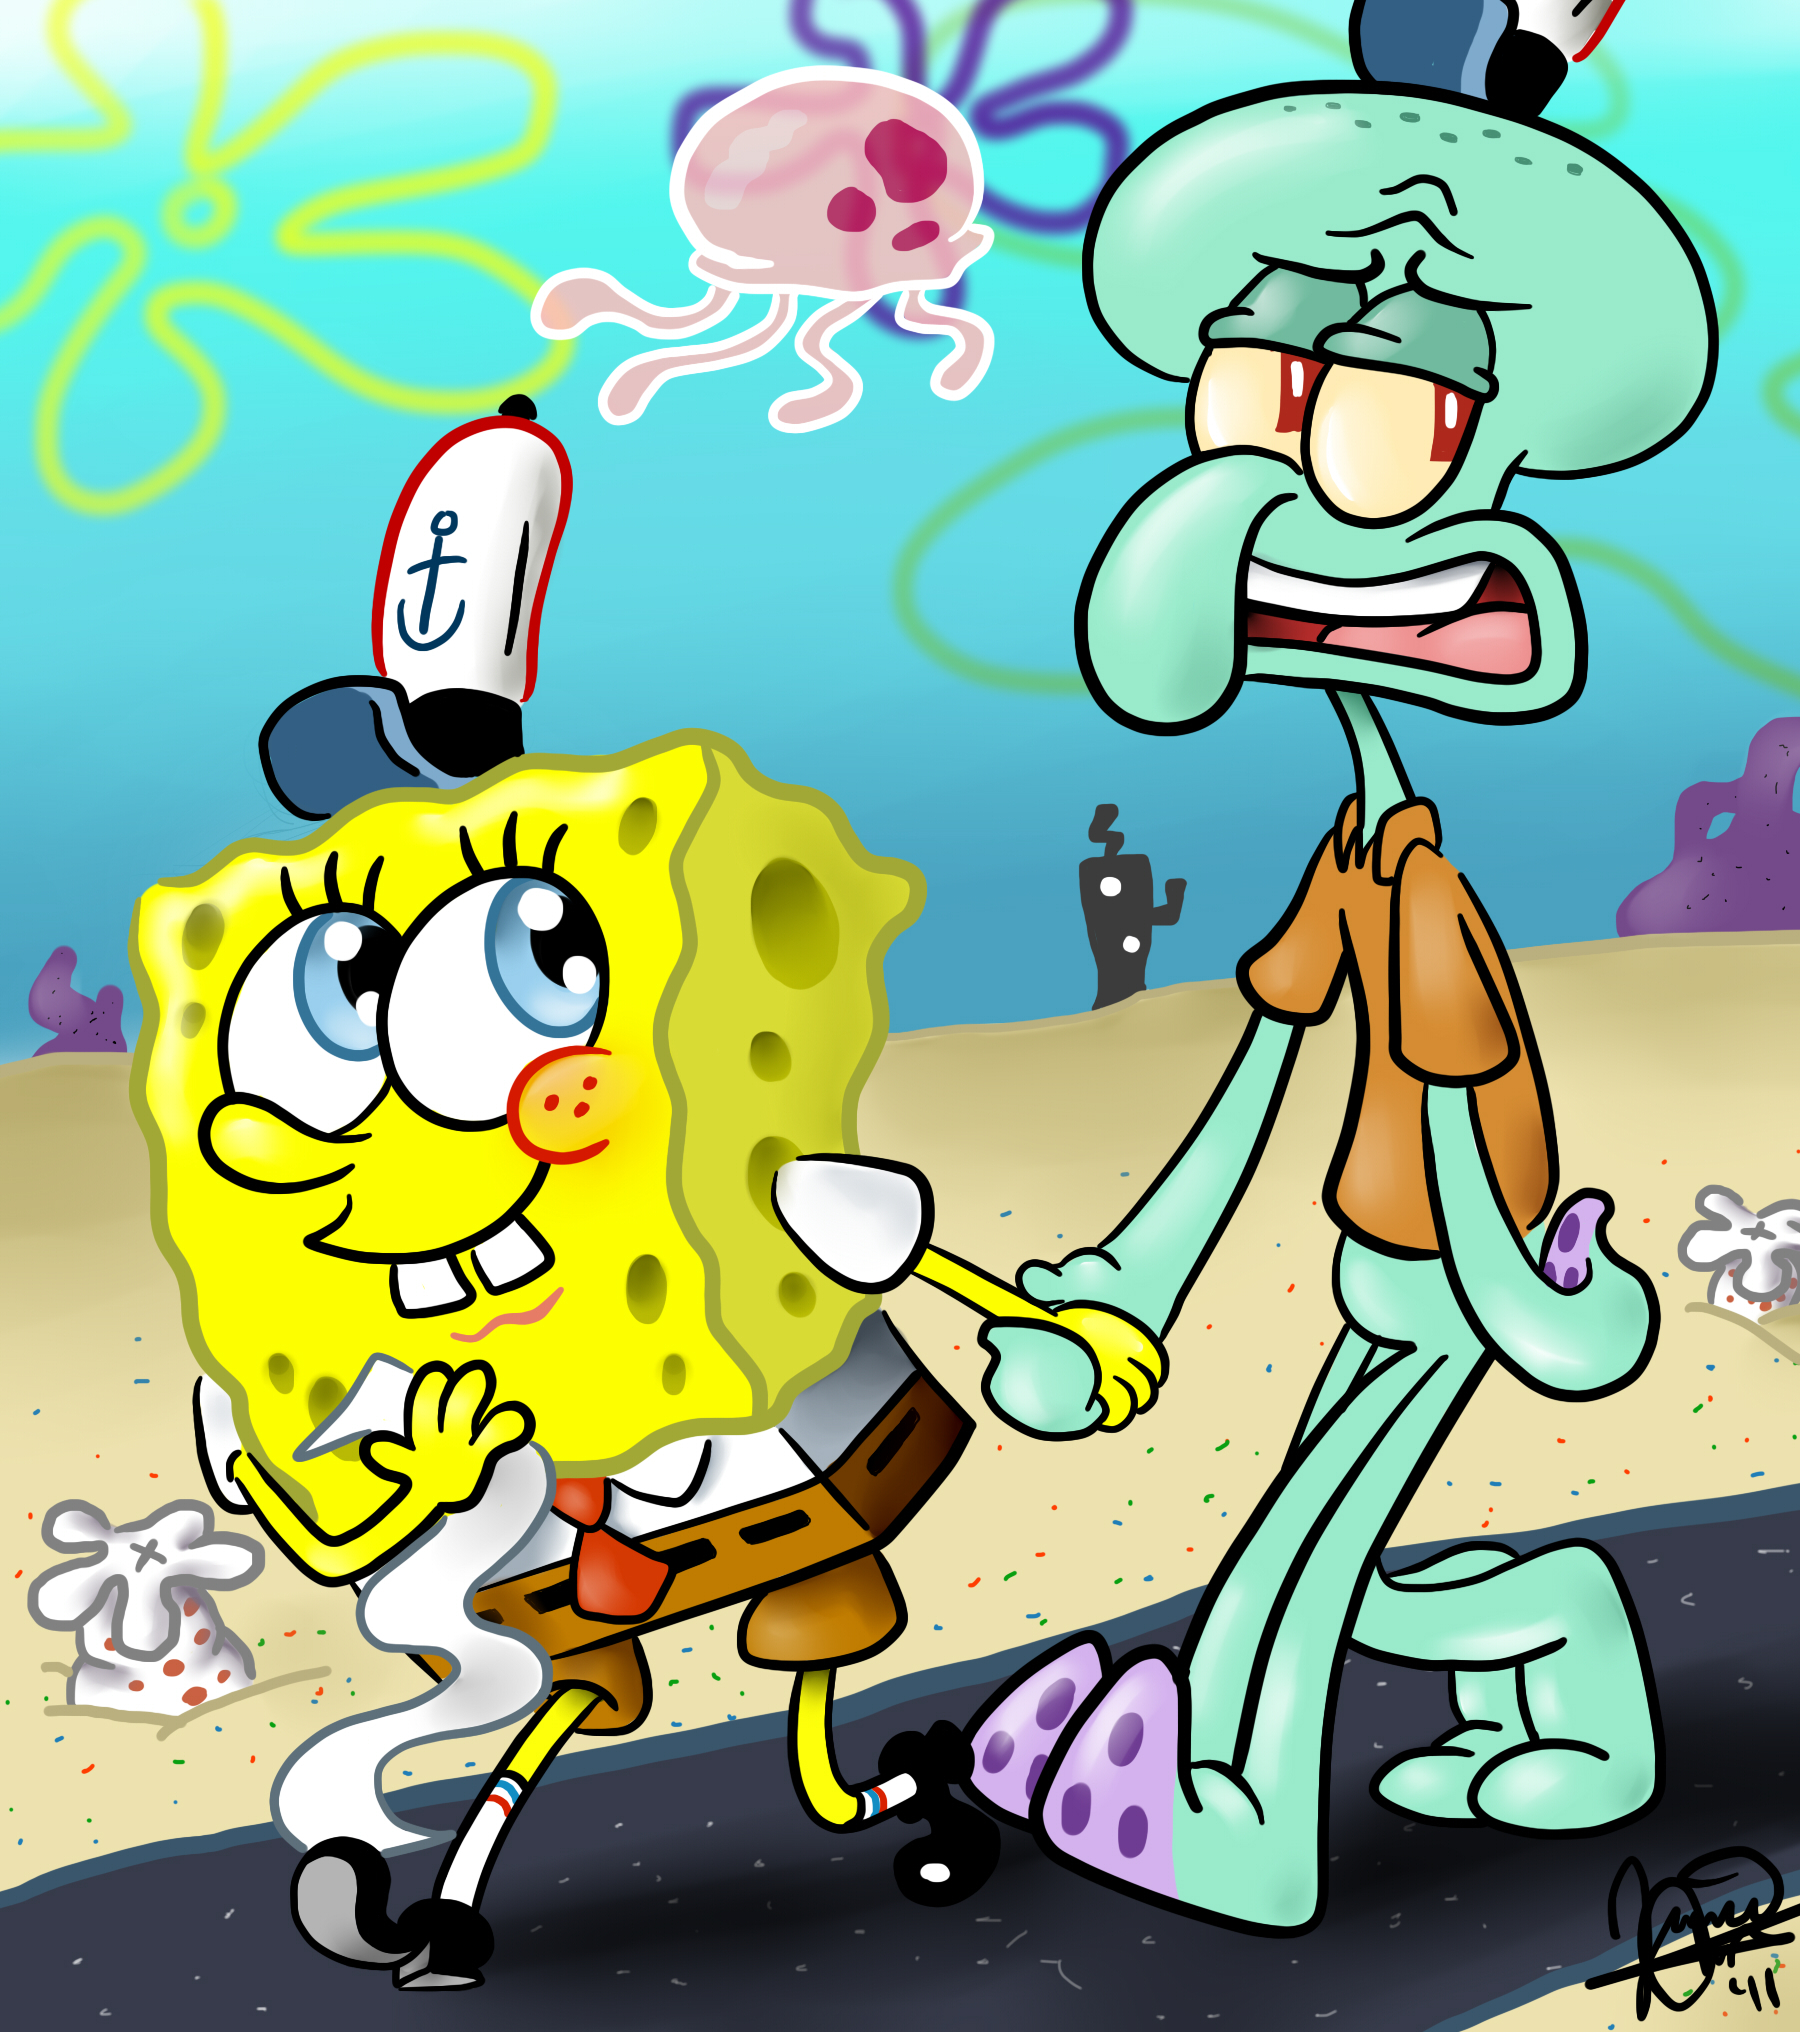 Kumpulan Gambar Lucu Karakter Spongebob Squarepants